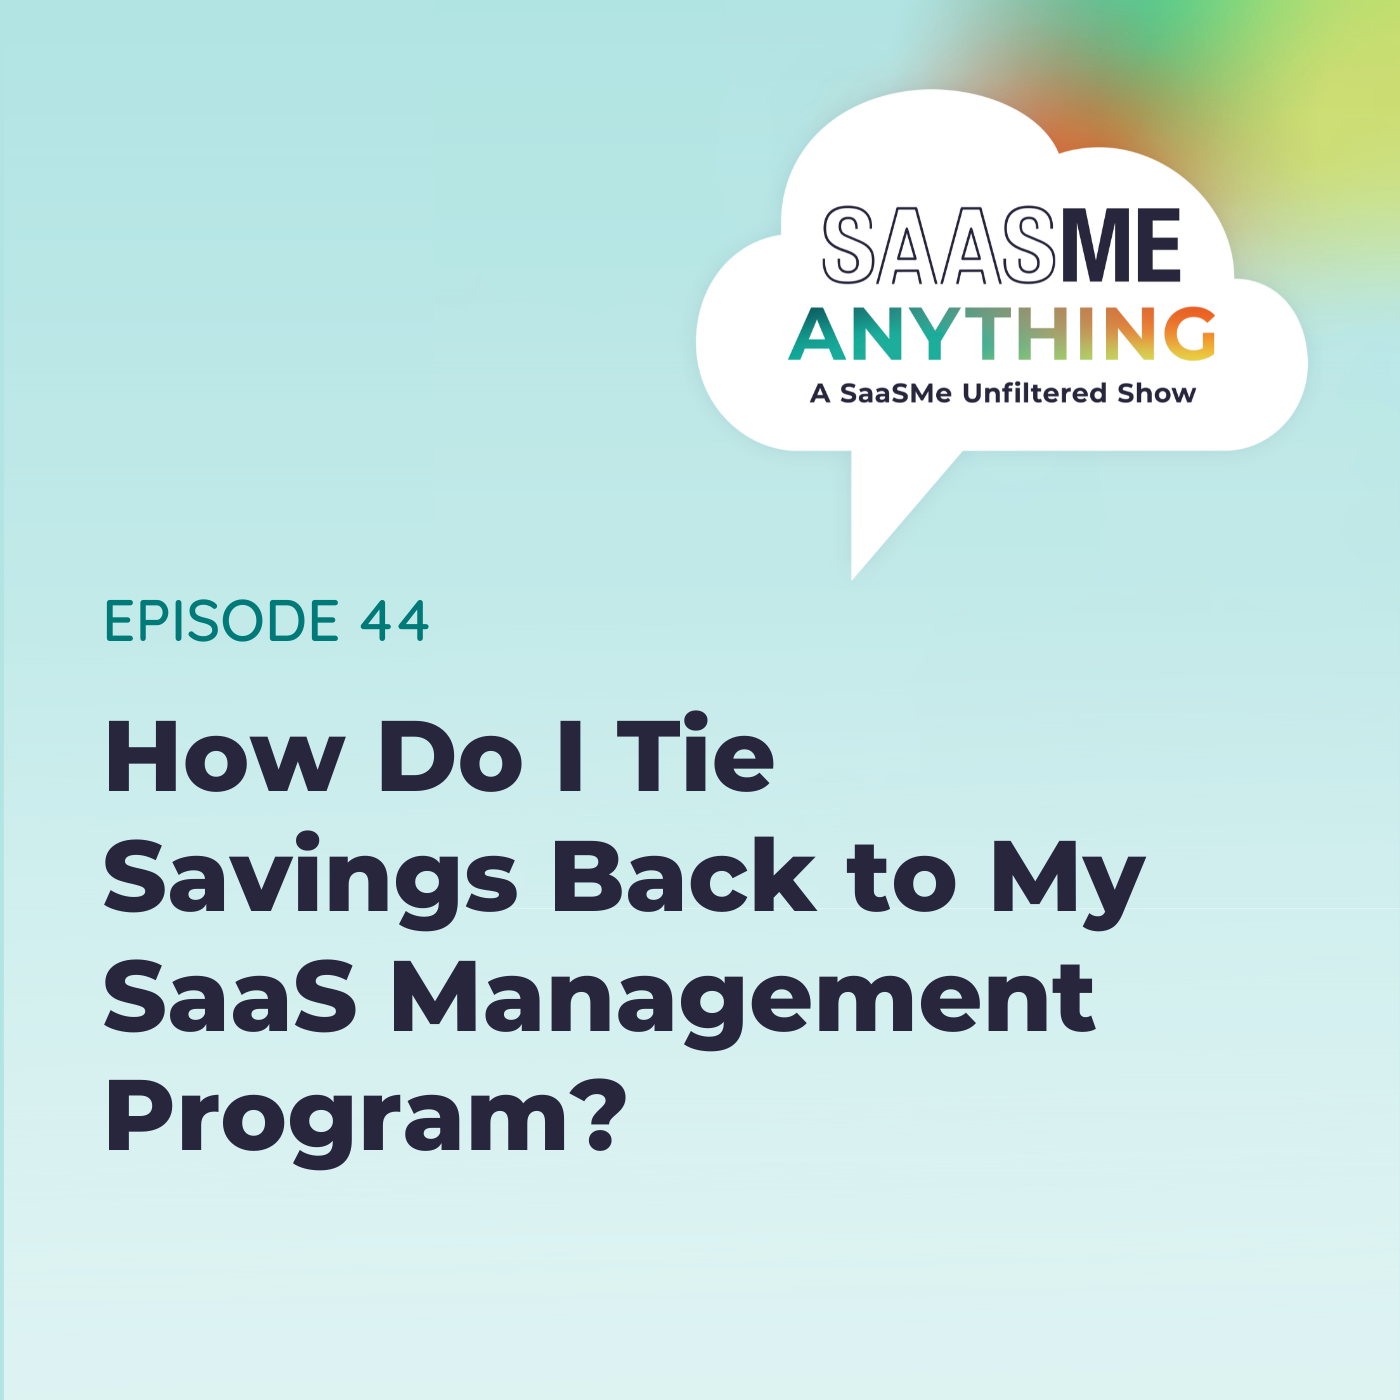 How Do I Tie Savings Back to My SaaS Management Program?